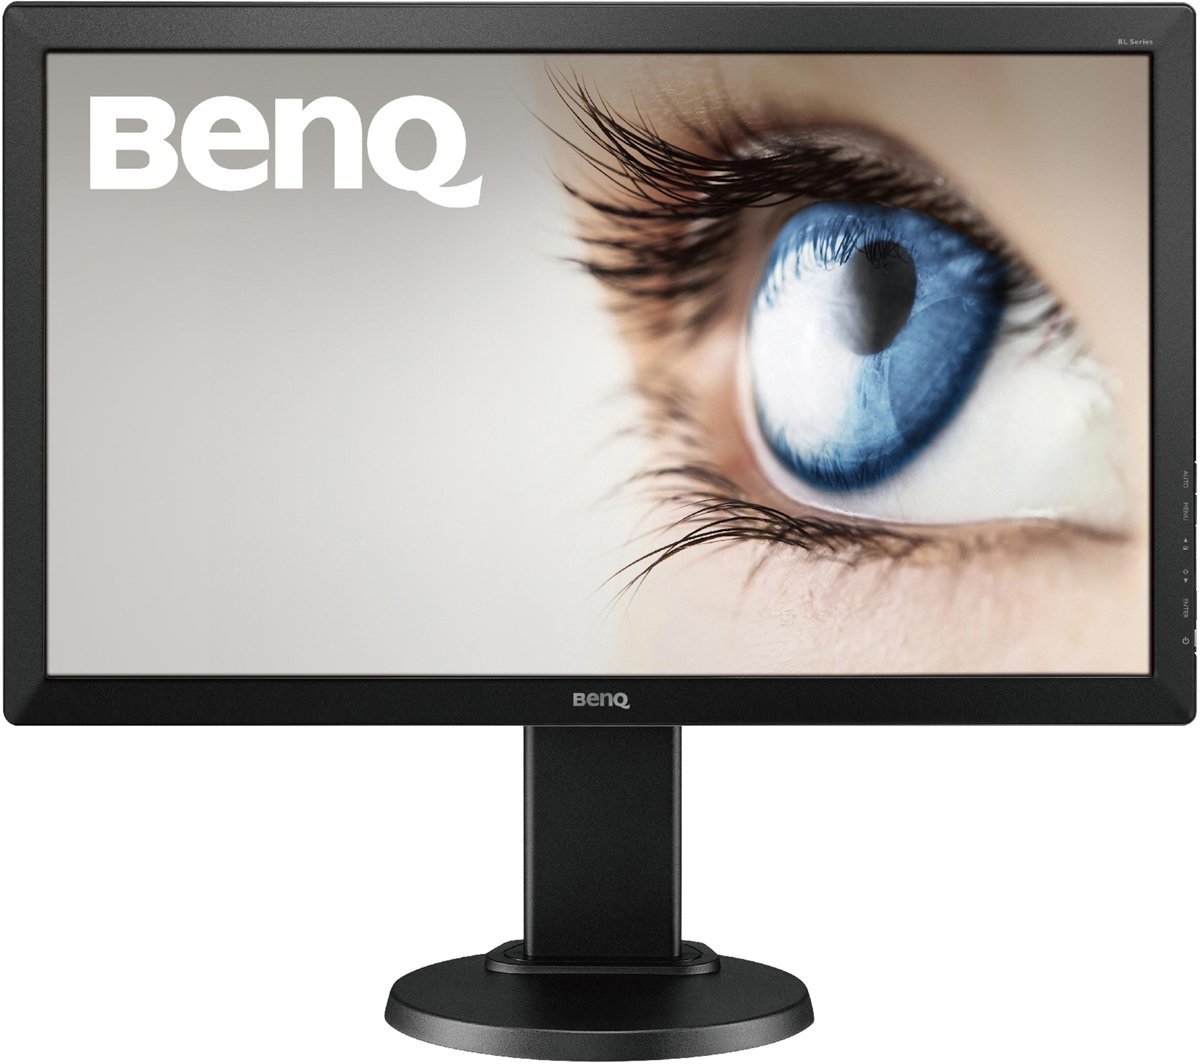 Benq BL2405PT - Full HD Monitor